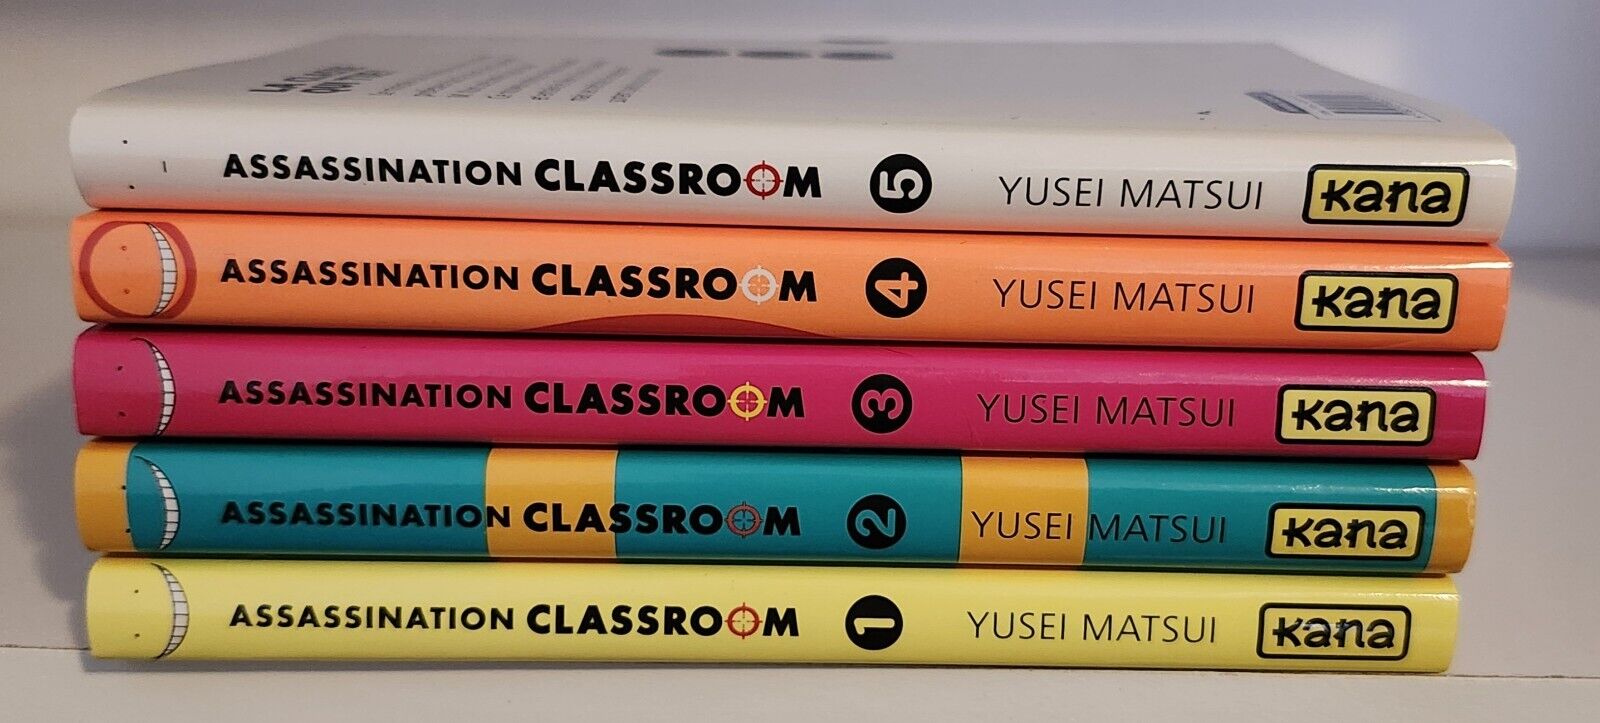 Assassination Classroom Manga Version Française Volume 1-2-3-4-5 (Yusei Matsui)